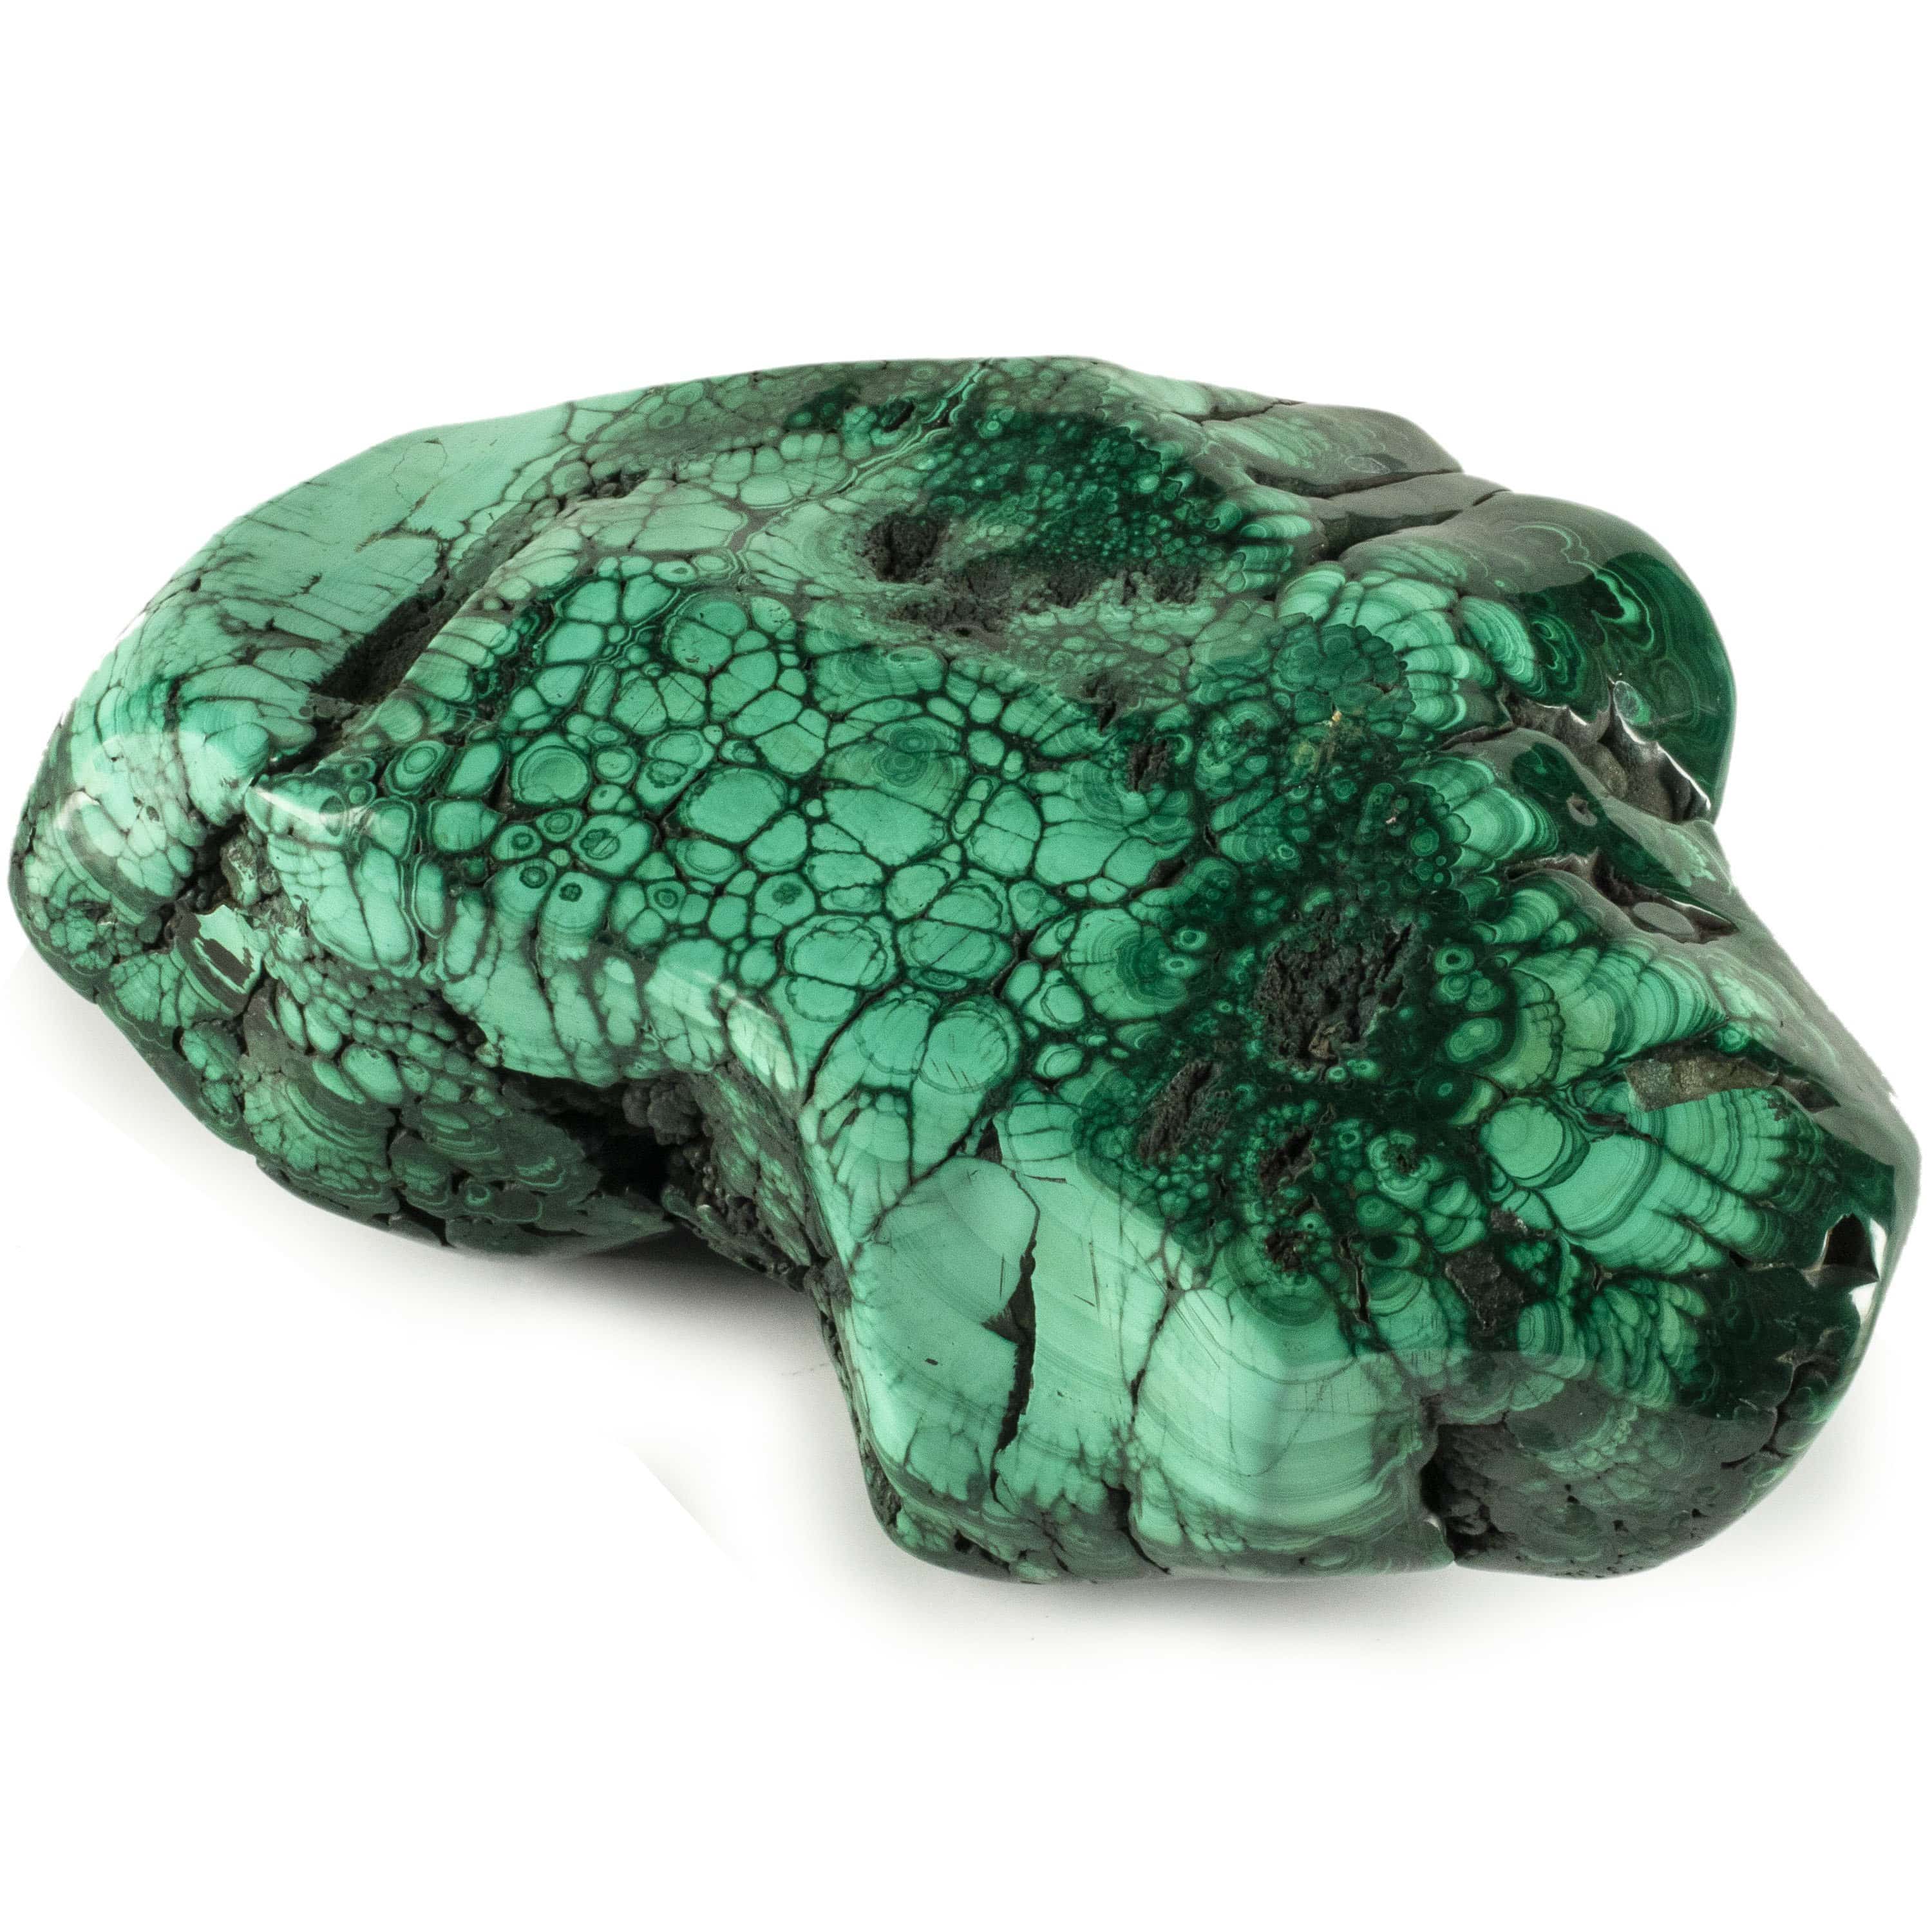 Kalifano Malachite Rare Natural Green Malachite Polished Freeform Specimen from Congo - 6.4 kg / 14.1 lbs MA4500.001